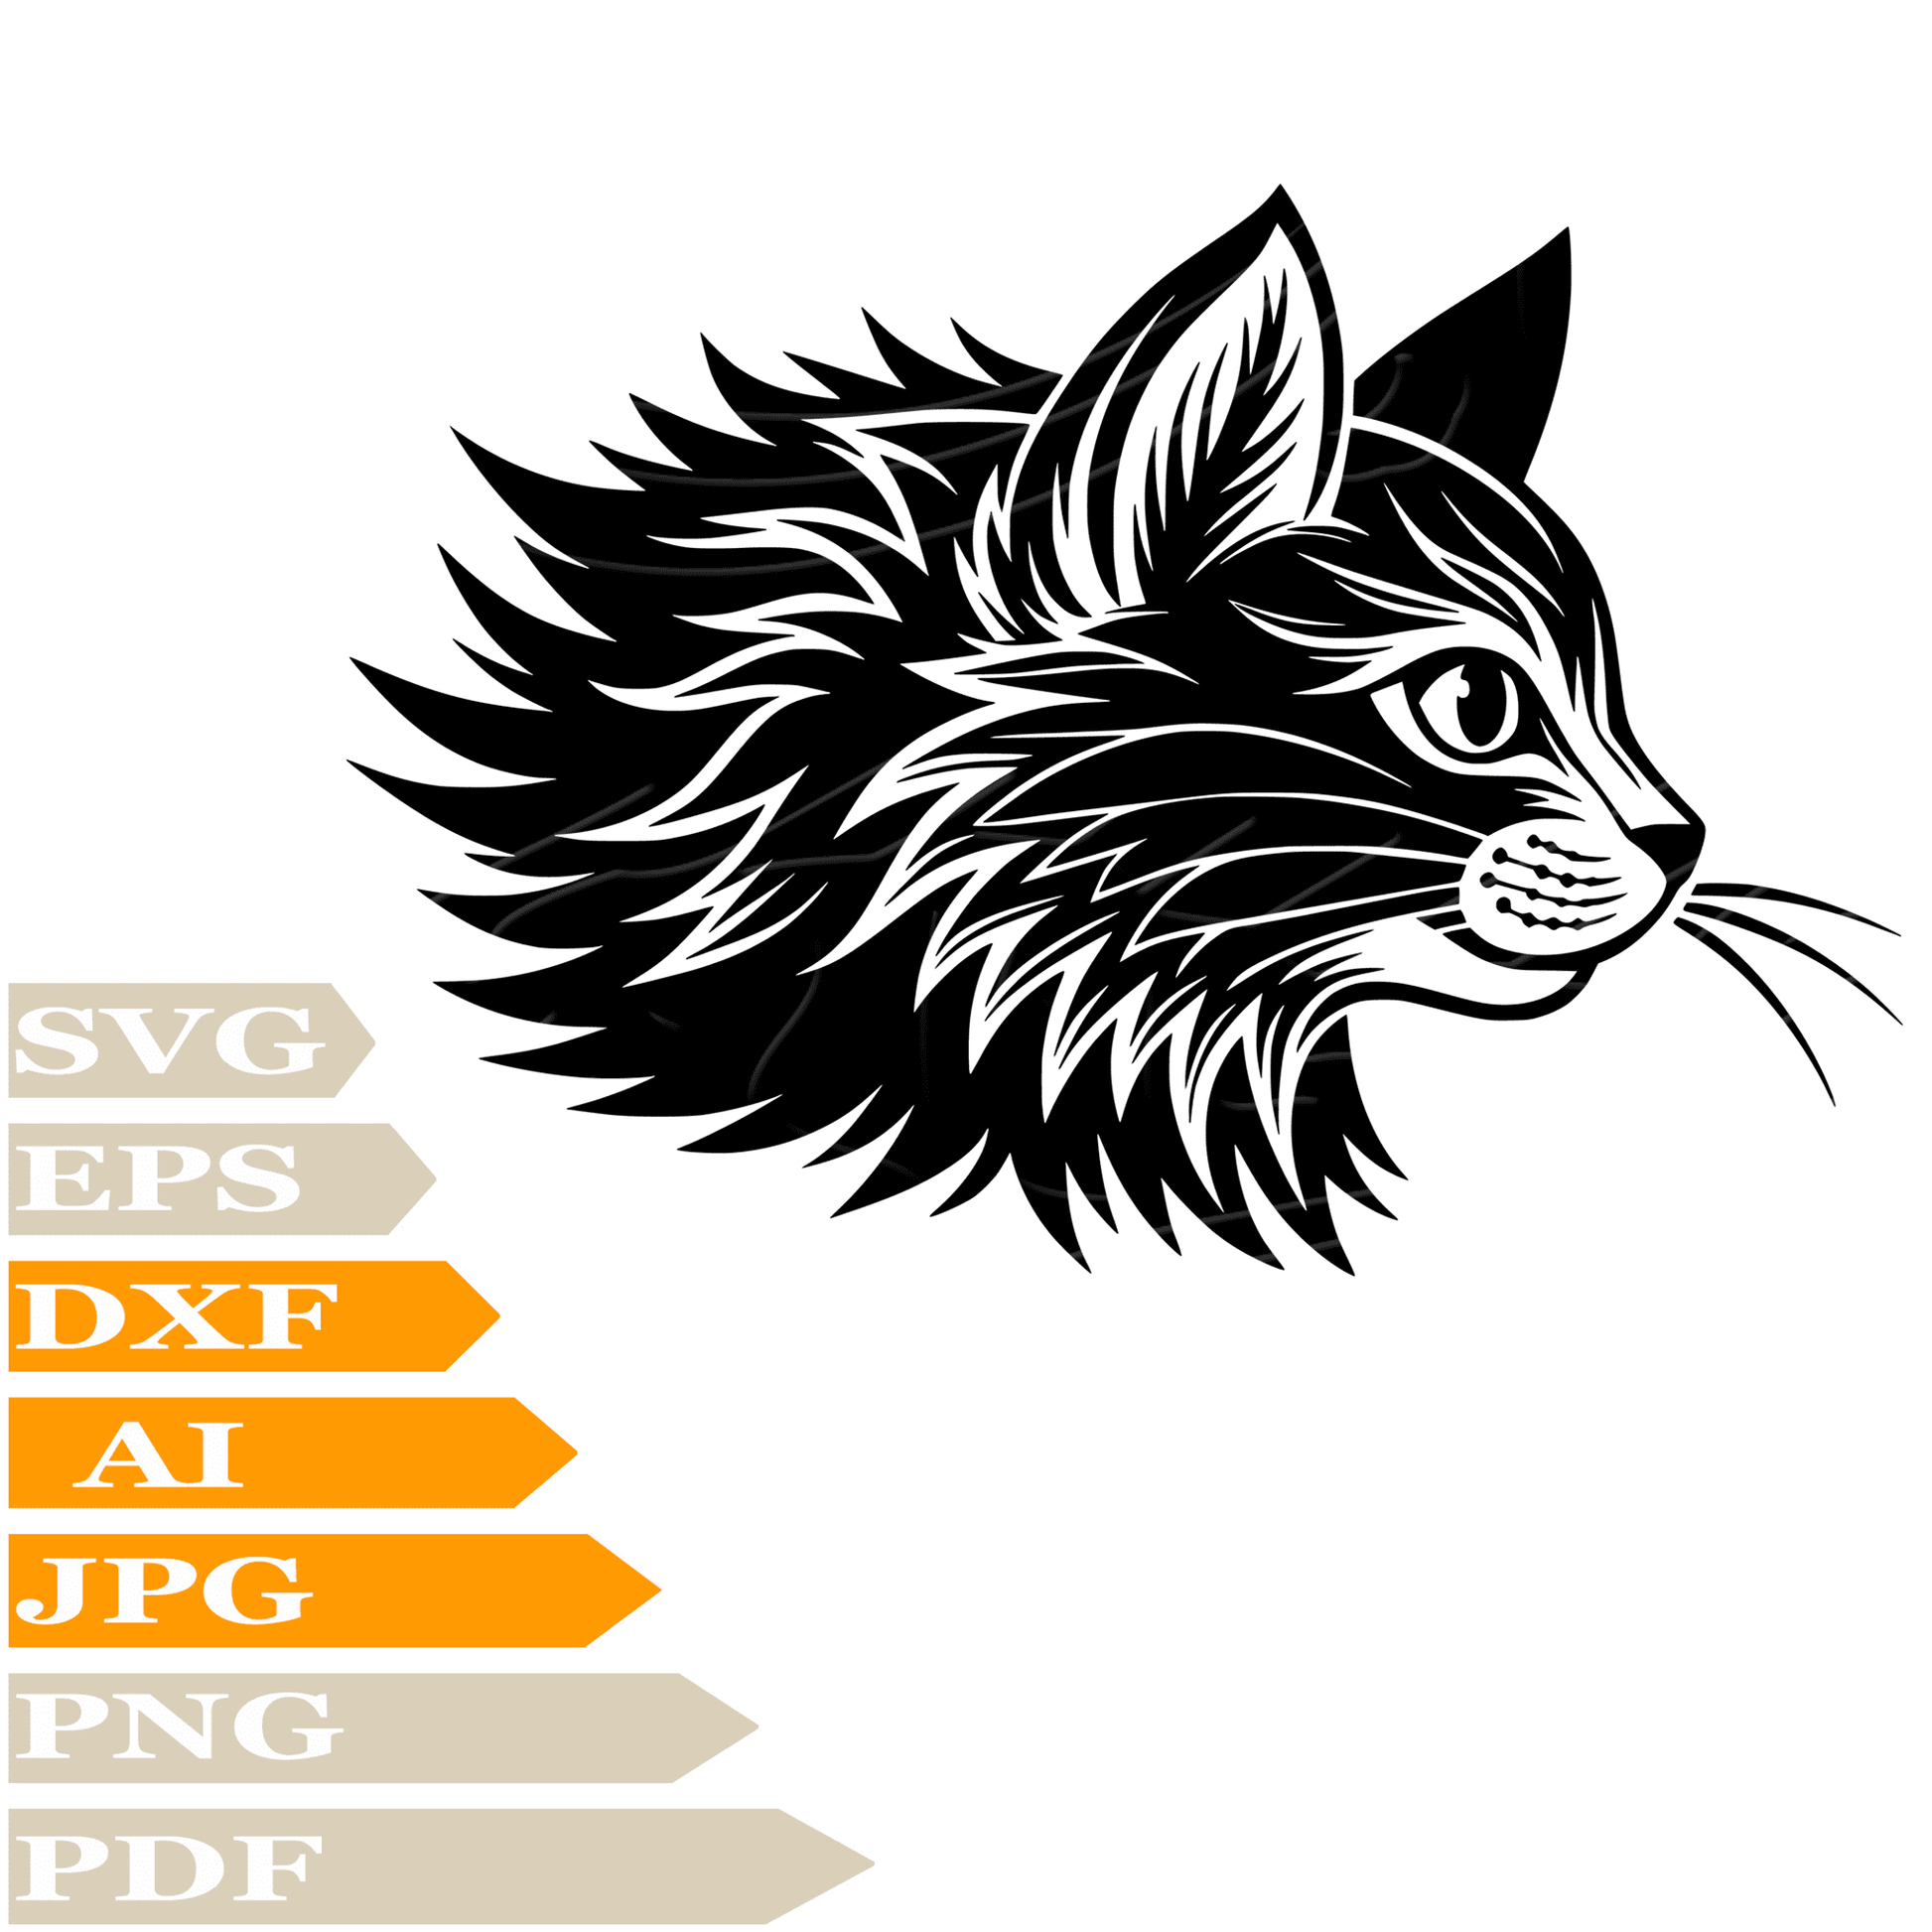 Cat SVG, Black Cat SVG File, Cat Head SVG Design, Black Cat Vector Graphics, PNG, Cricut, Image Cut, Clipart,  For Tattoo, Cut File, Silhouette